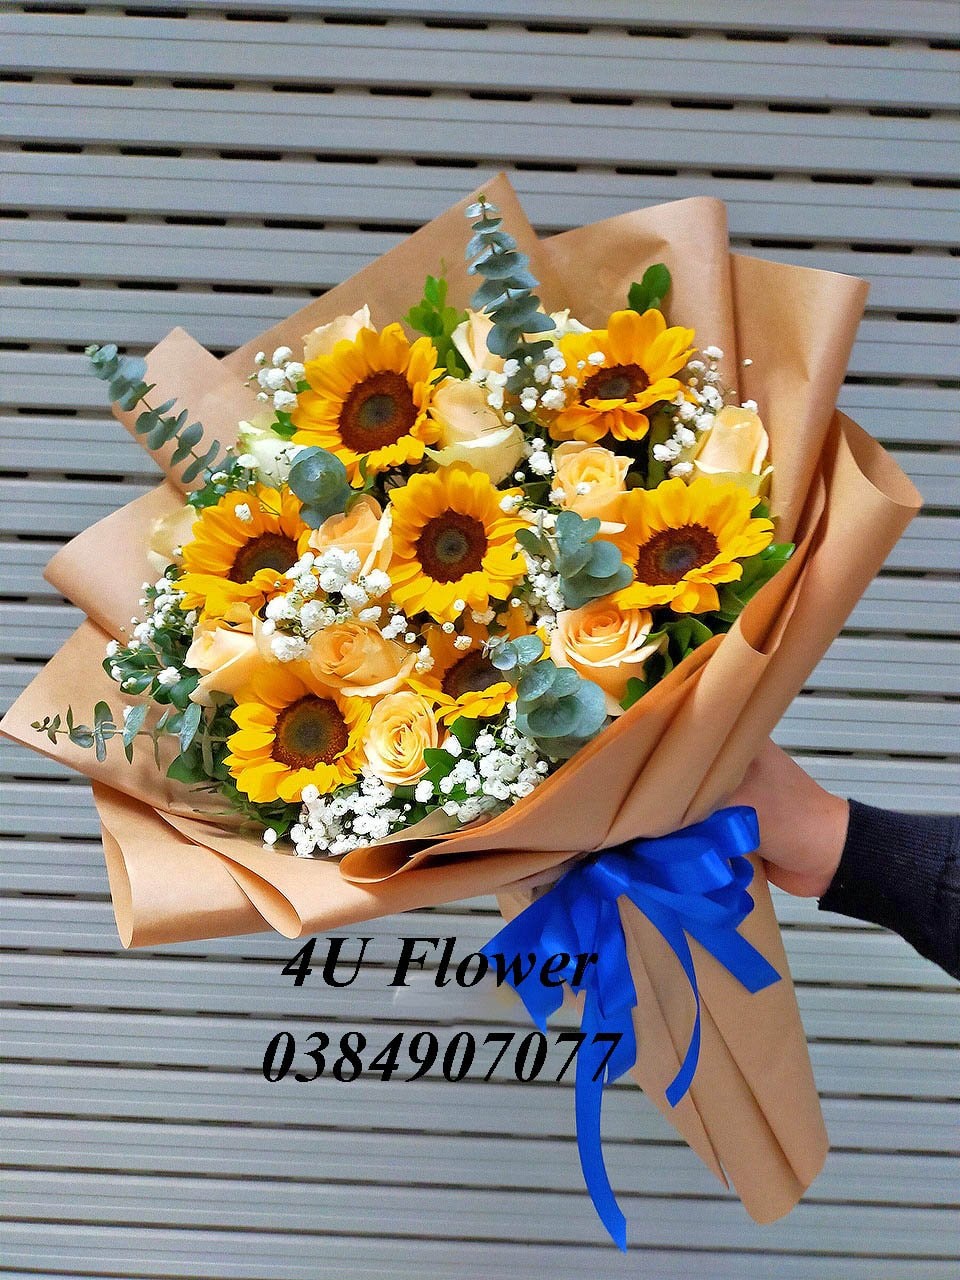 4U Flower 